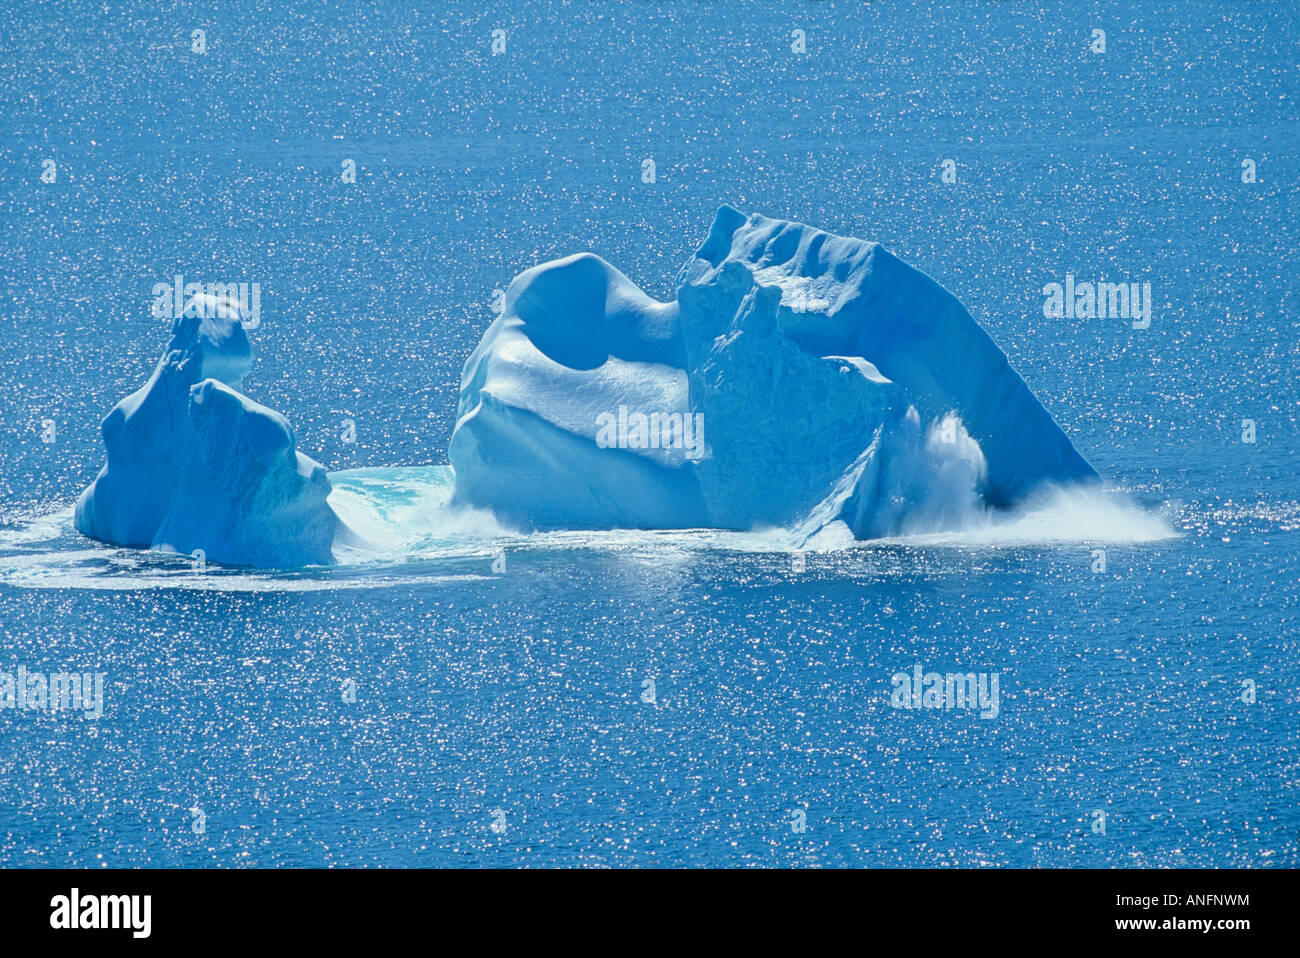 Iceberg breaking up, off St. John's, Newfoundland, Canada. Stock Photo